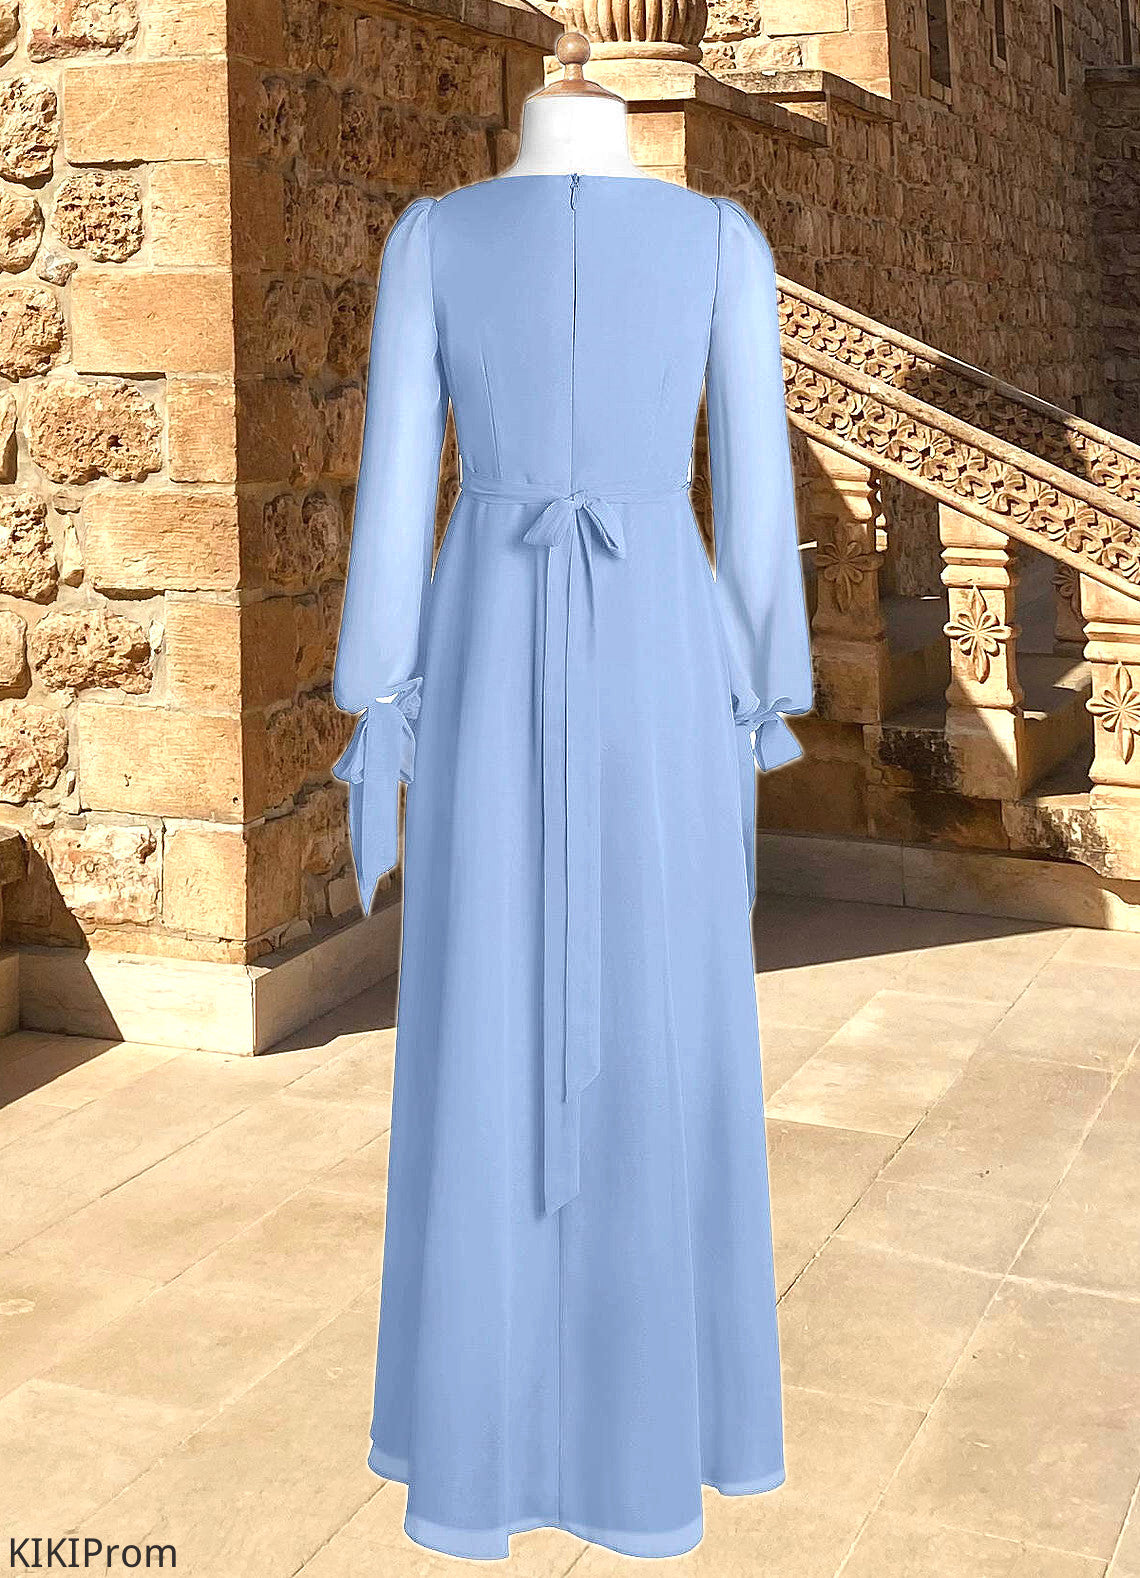 Viola A-Line Chiffon Floor-Length Junior Bridesmaid Dress with Pockets Steel Blue DZP0022867